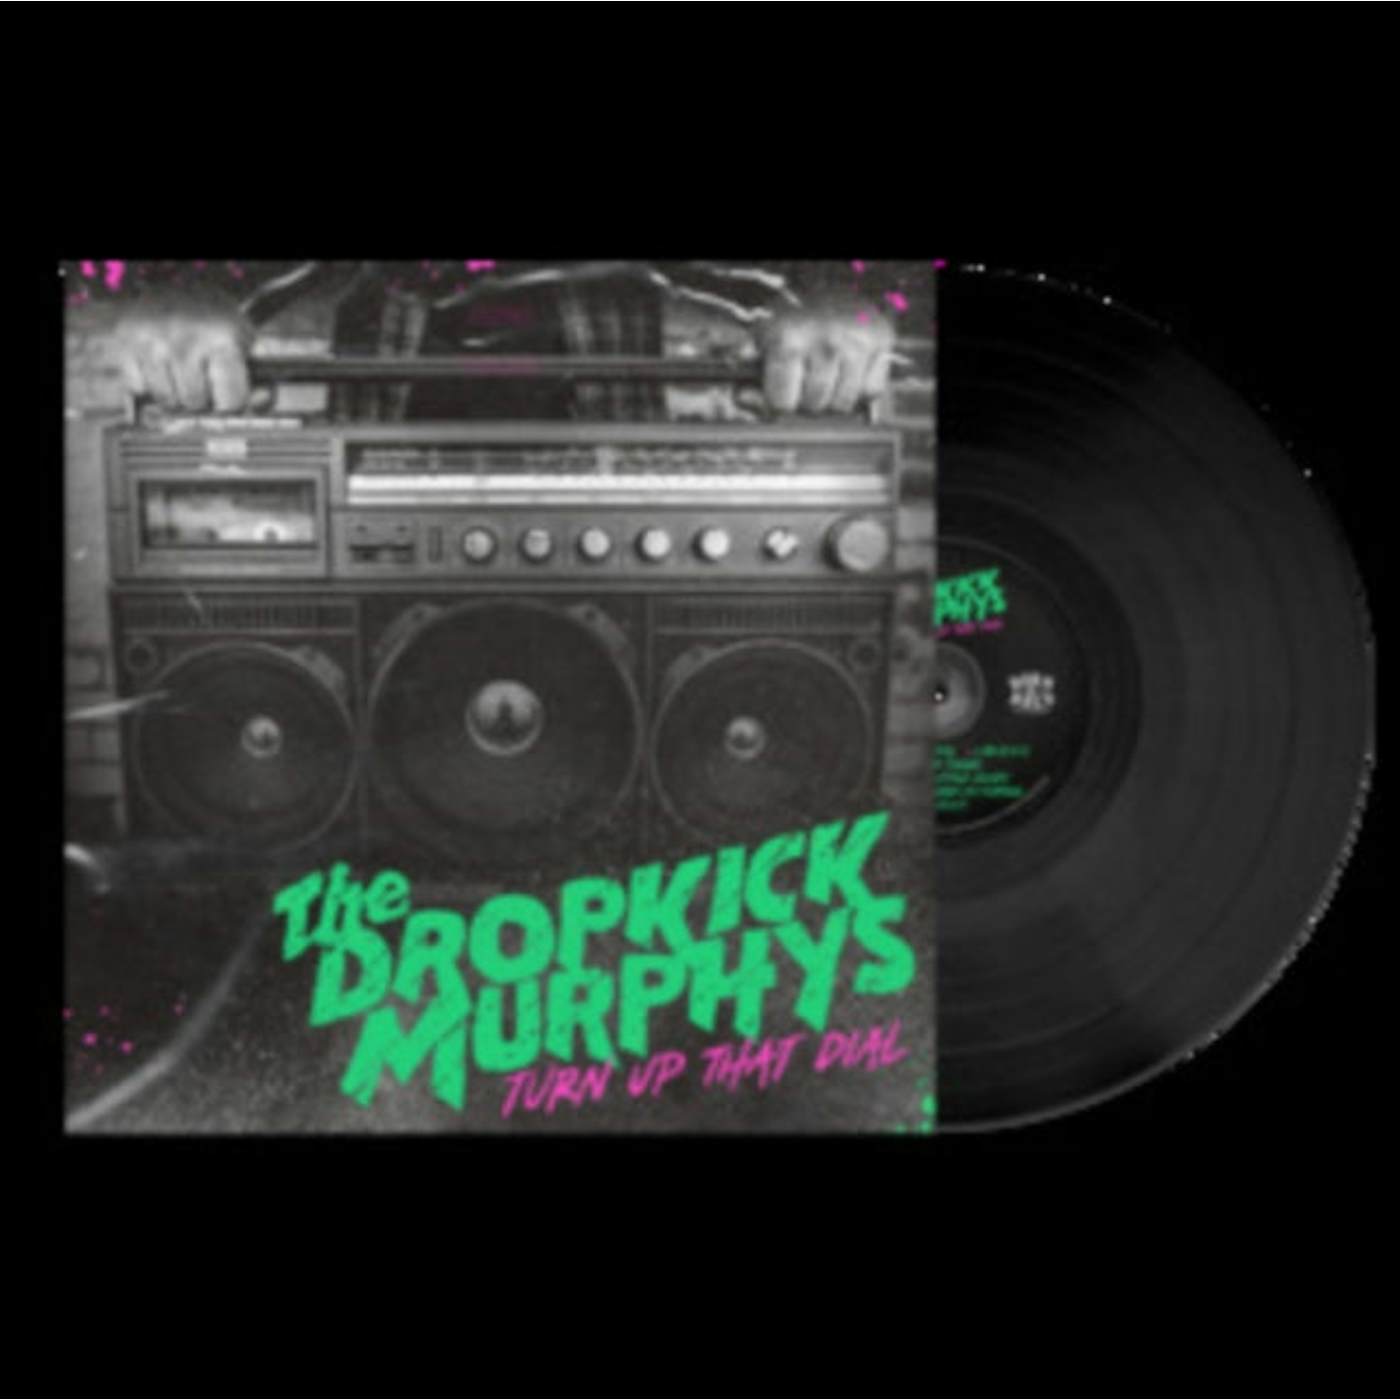 The Dropkick Murphys LP Vinyl Record - Turn Up That Dial